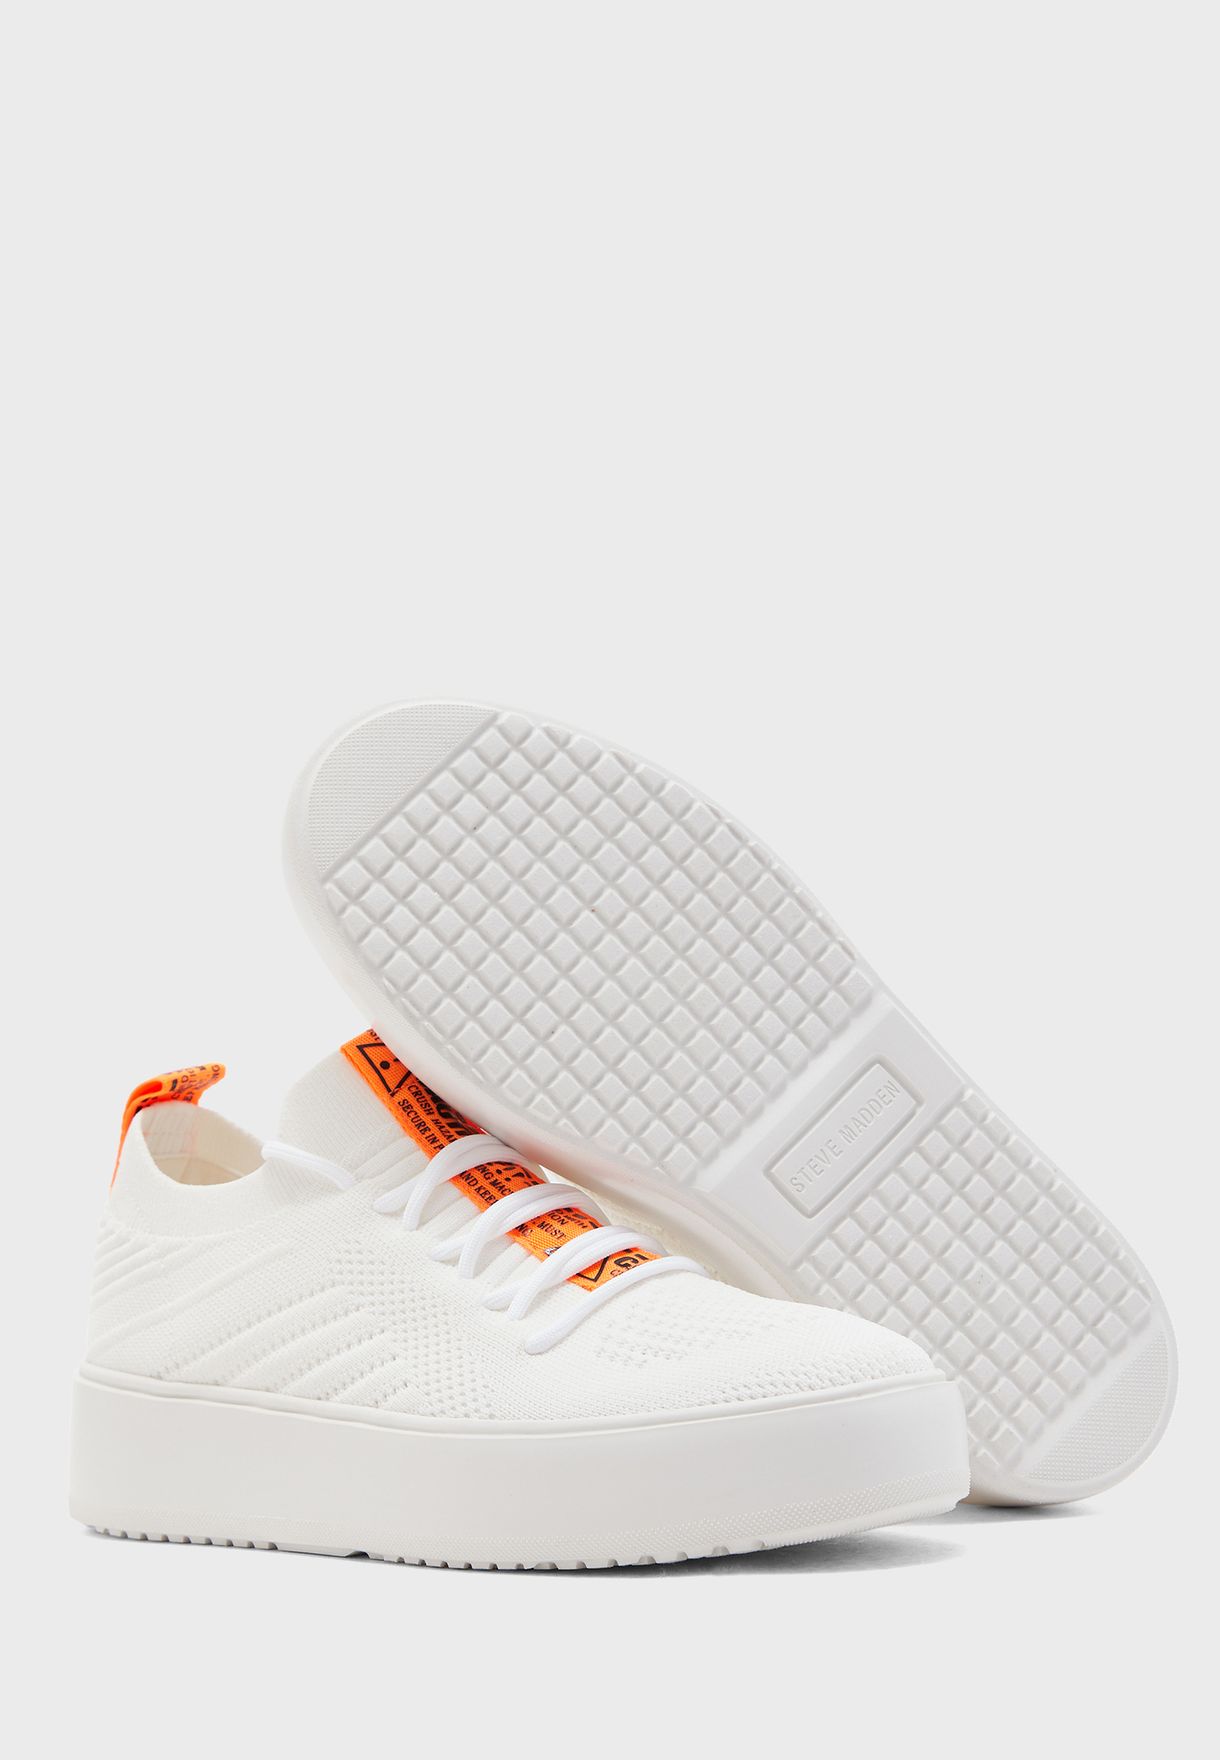 steve madden sneakers orange